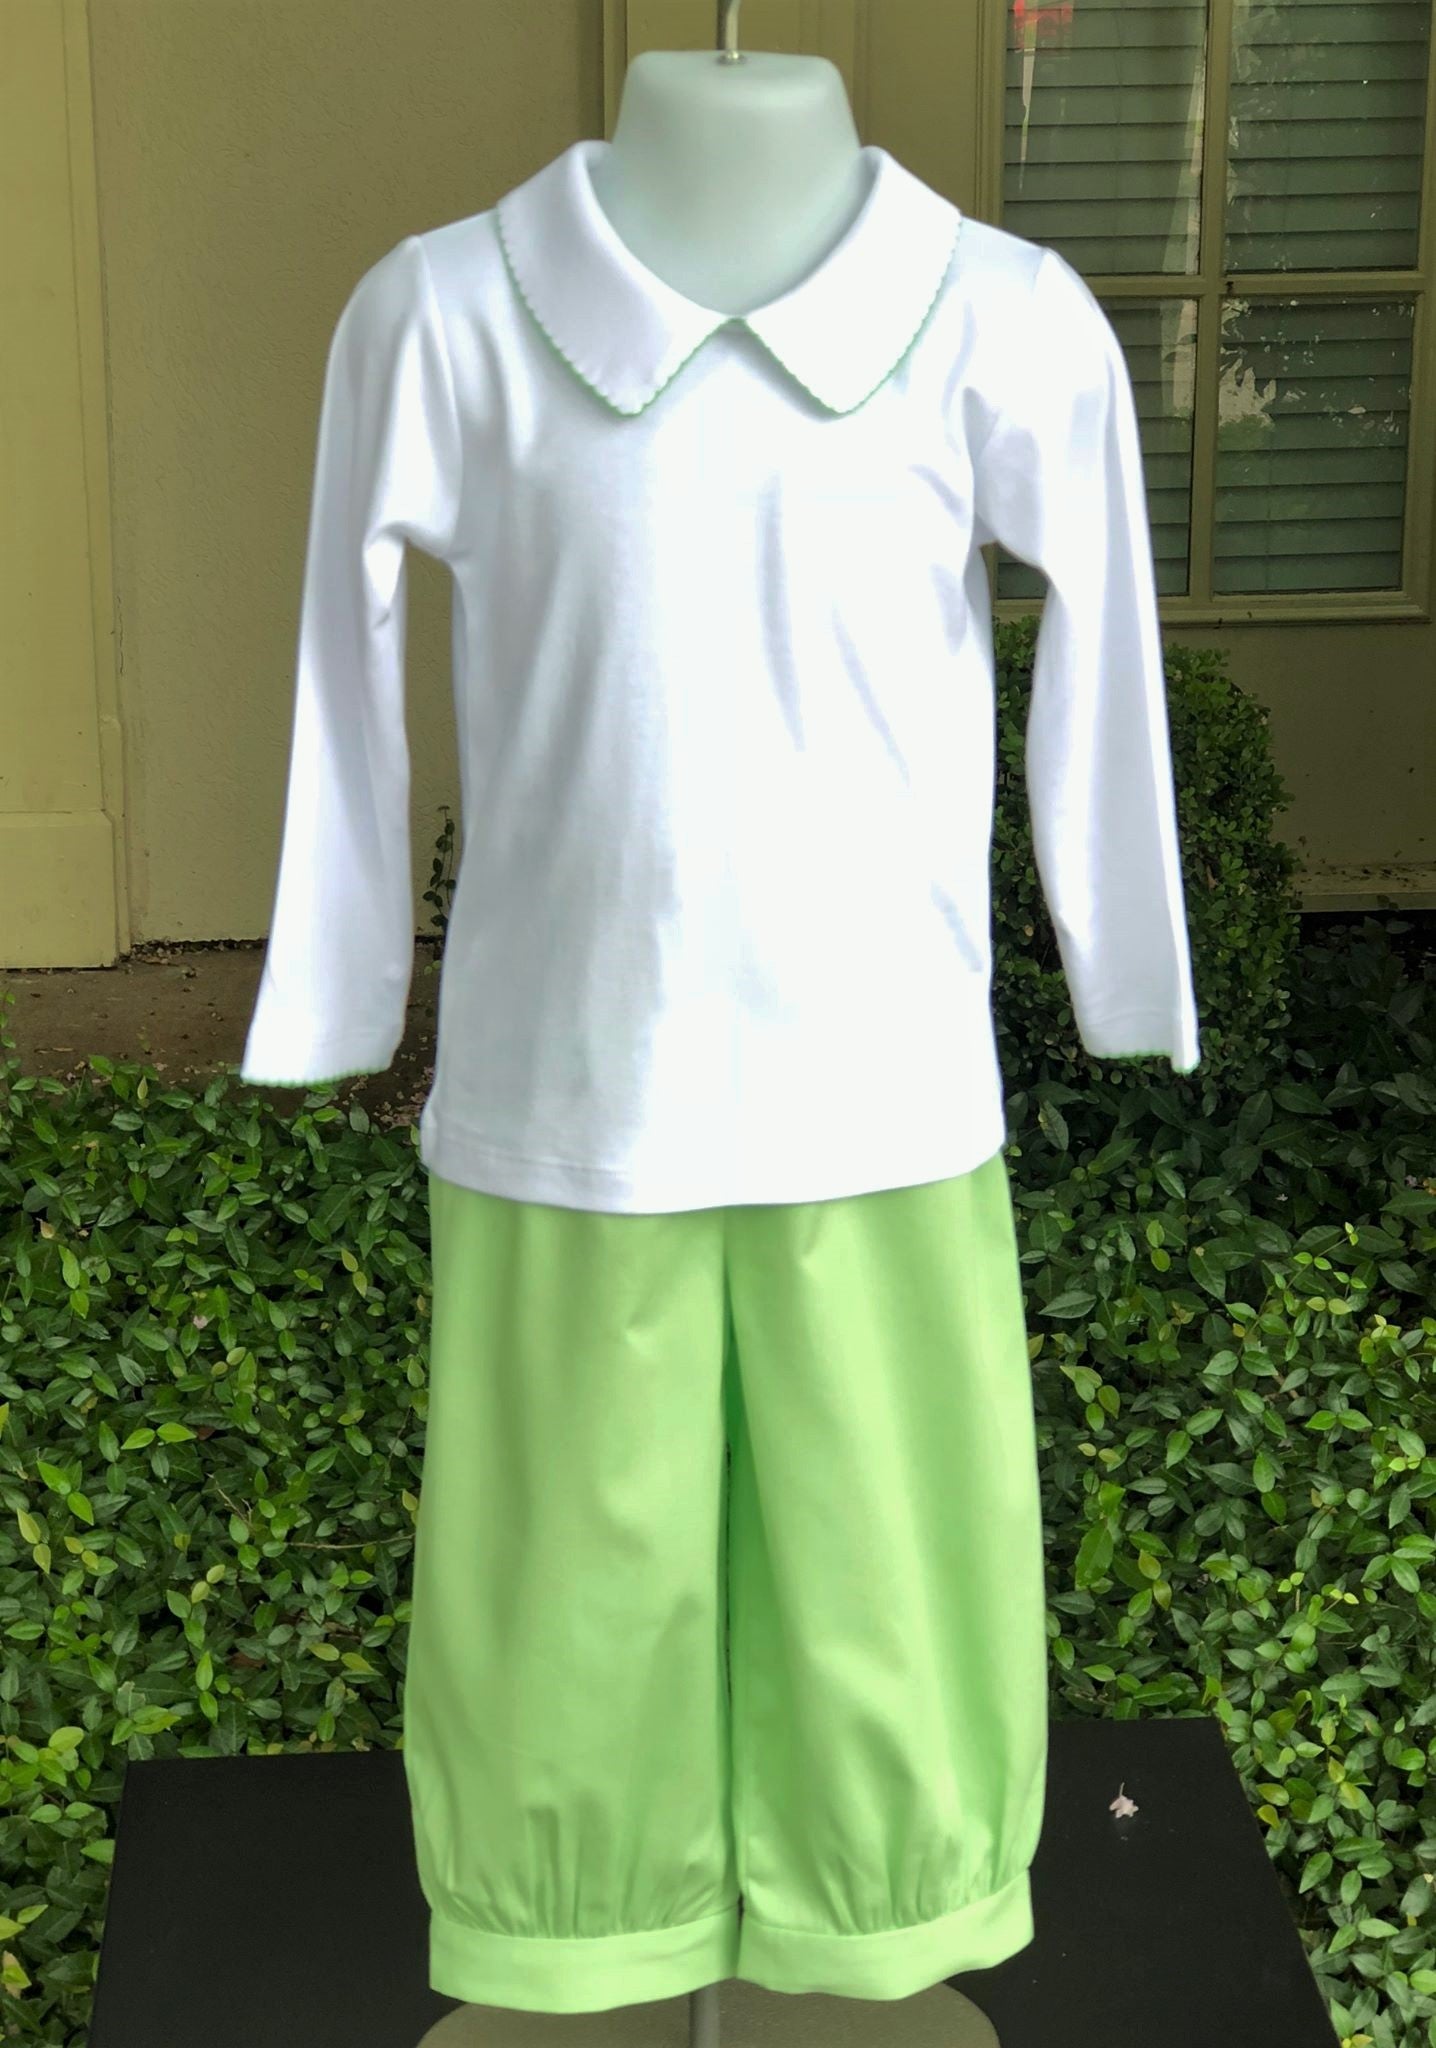 Namacheko embroidered pointed-collar shirt - Green